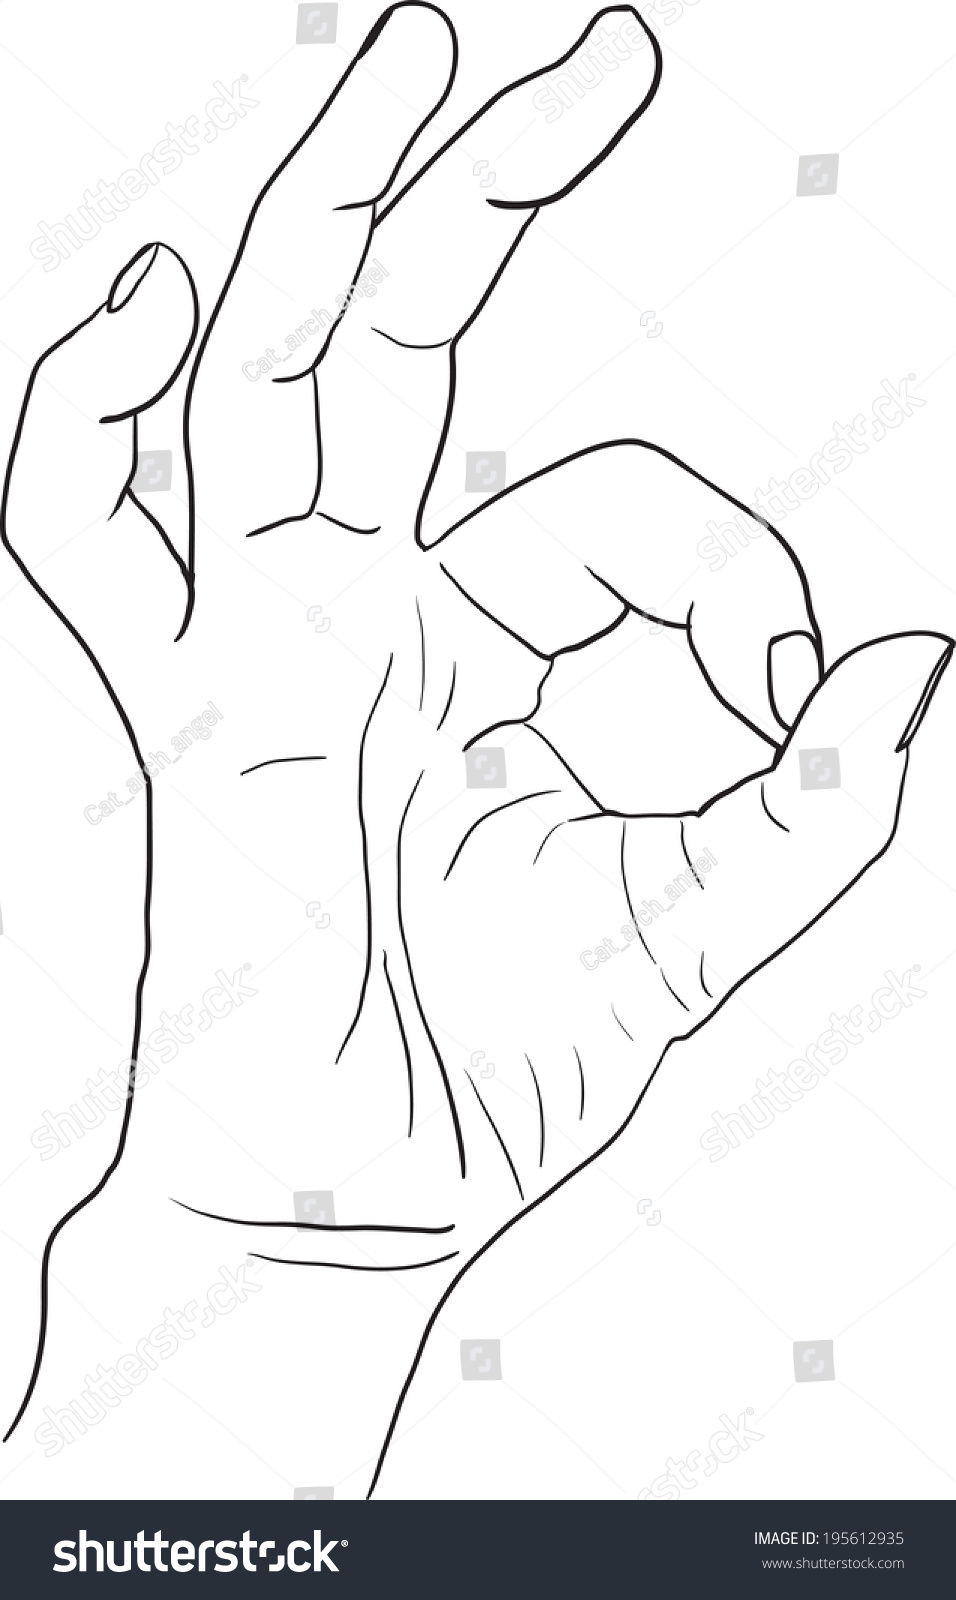 Sketch Drawing Hand Vector Illustration Stock Vector (Royalty Free ...